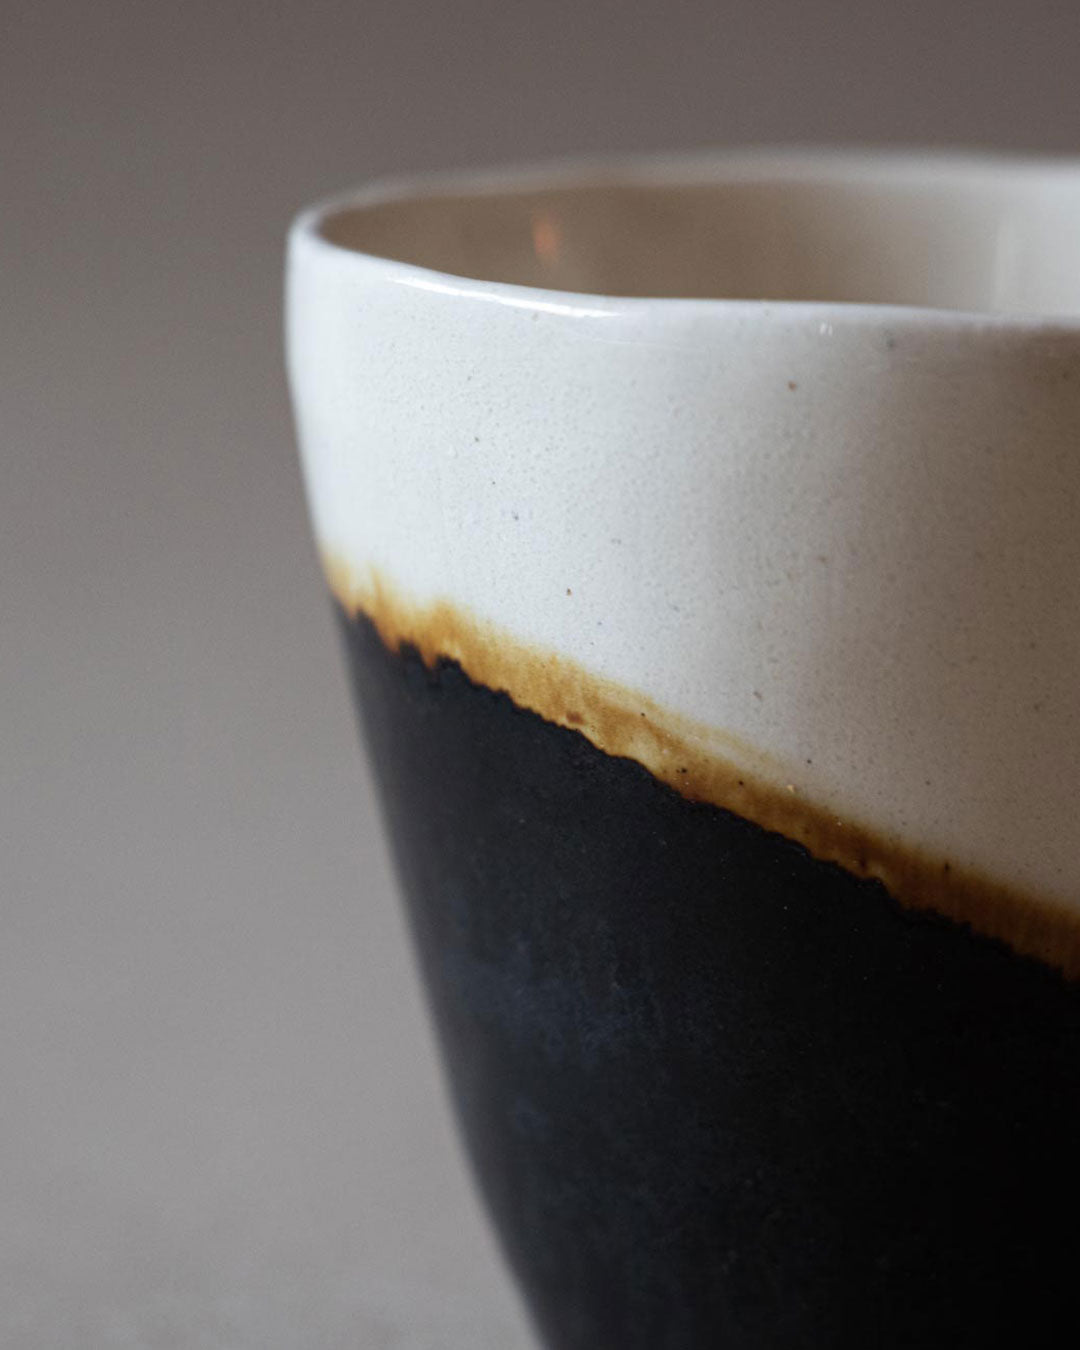 Half Moon espresso cup ceramics Claire Lune